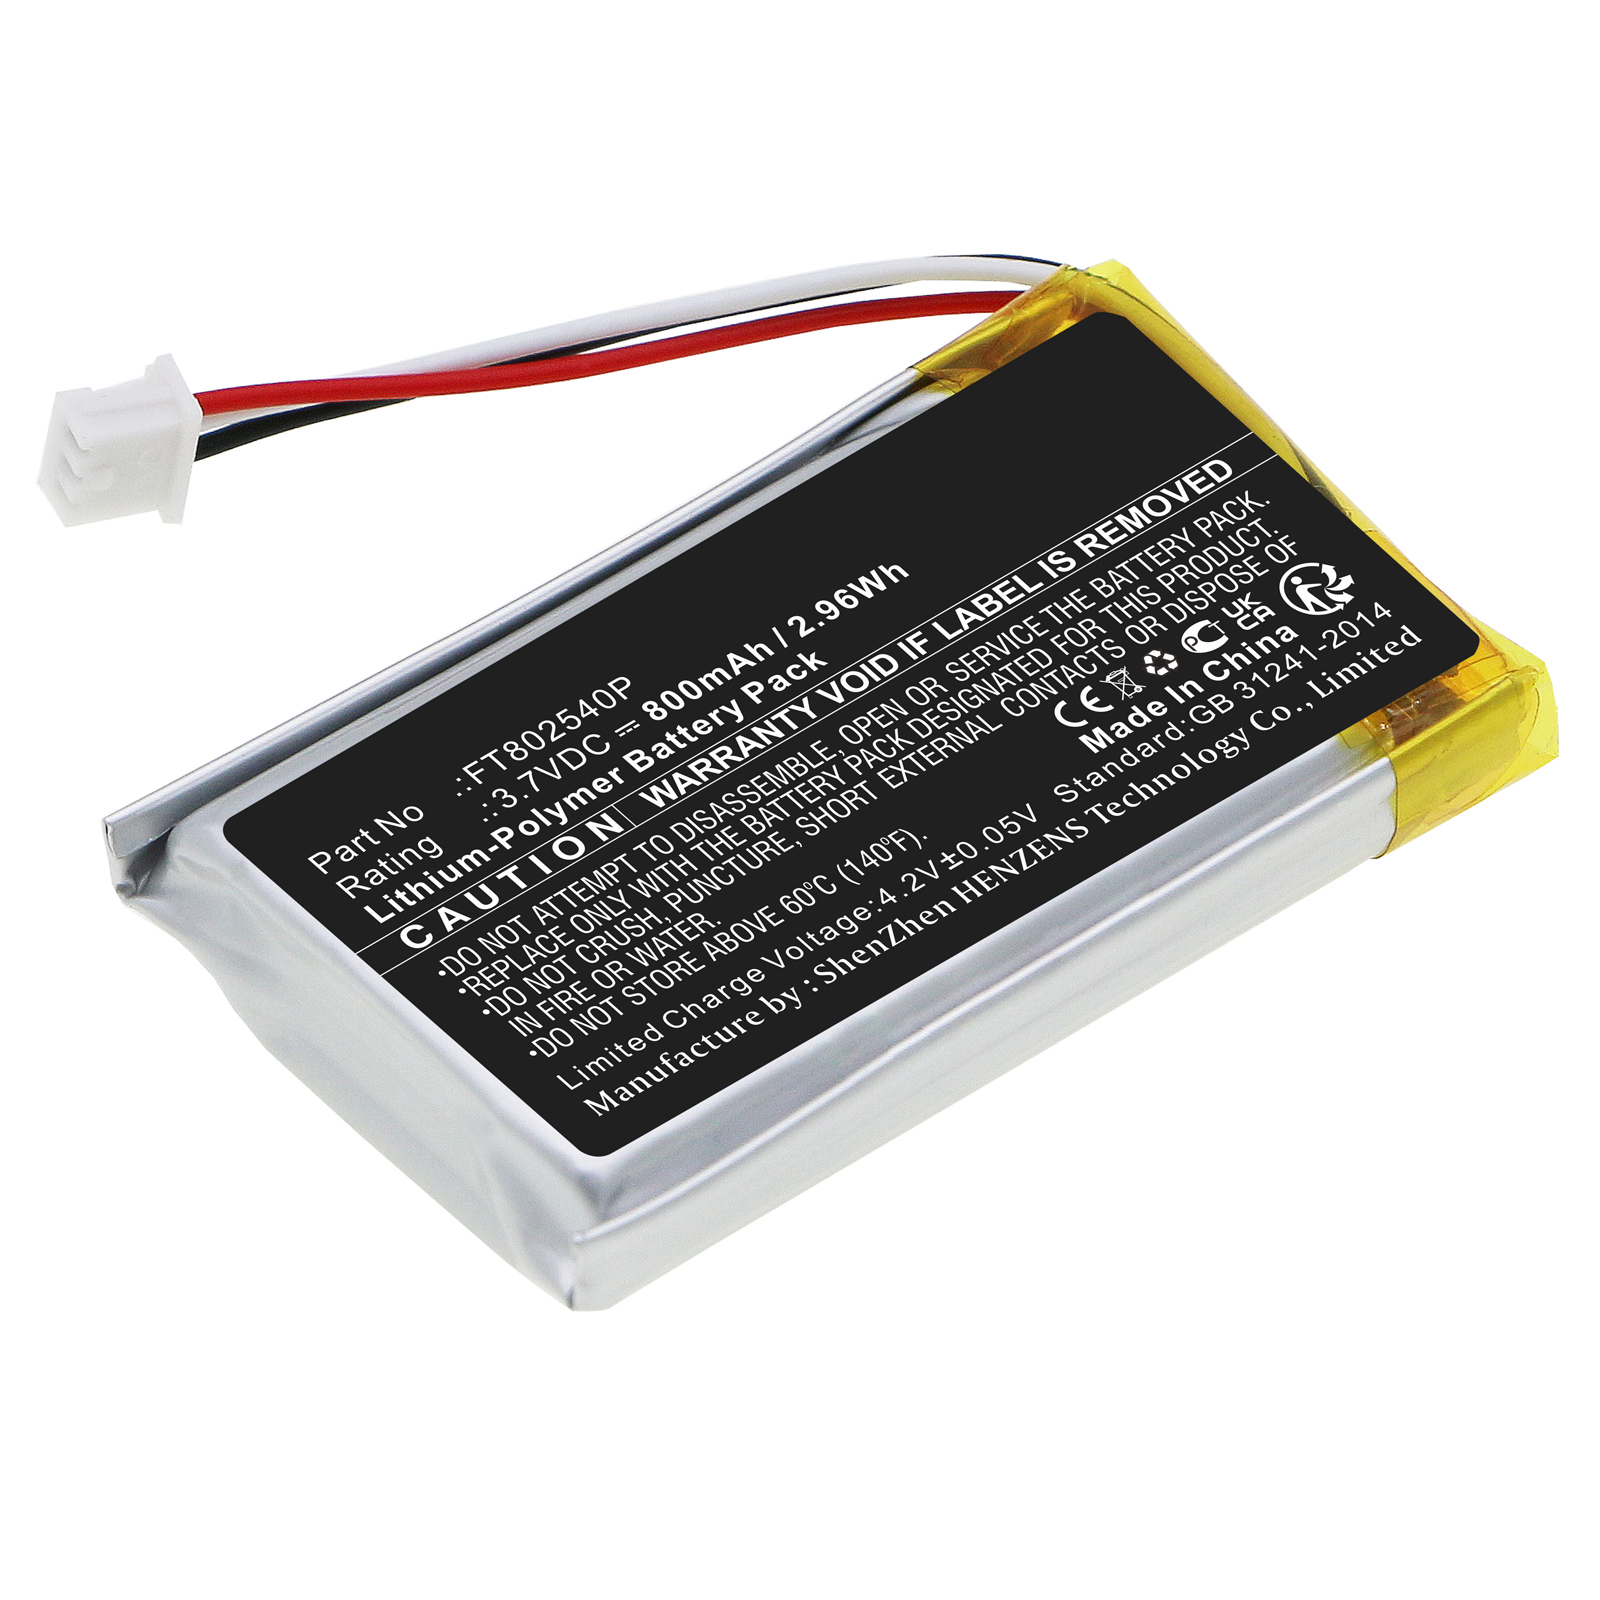 Synergy Digital Keyboard Battery, Compatible with ASUS FT802540P Keyboard Battery (Li-Pol, 3.7V, 1000mAh)